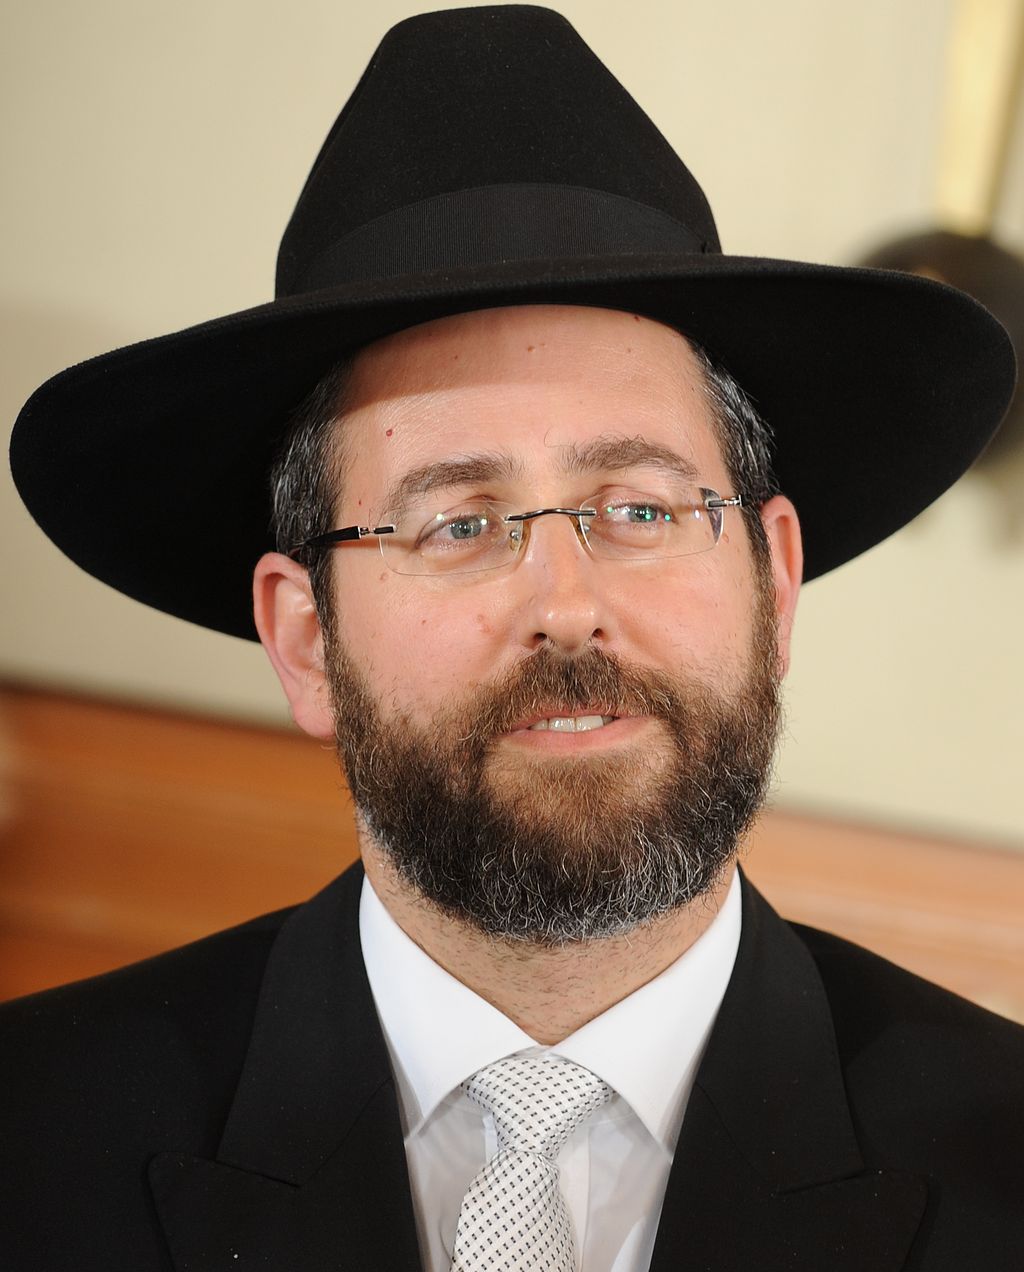 Chief Rabbi of Israel <b>David Lau</b> - rabbi-david-lau-wiki-commons-raw-no-restrictions